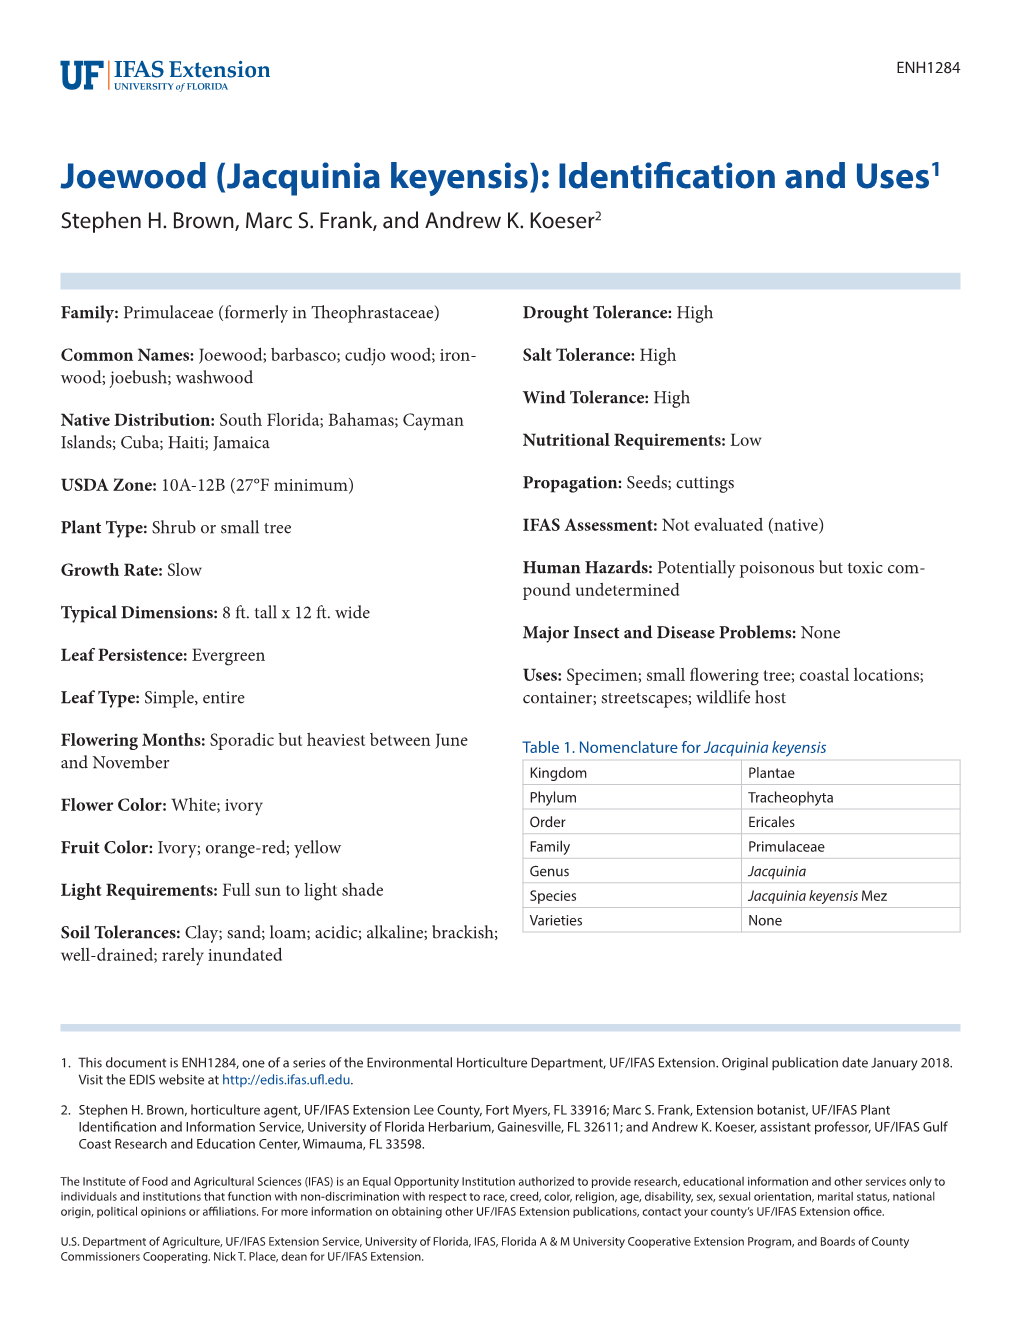 Joewood (Jacquinia Keyensis): Identification and Uses1 Stephen H